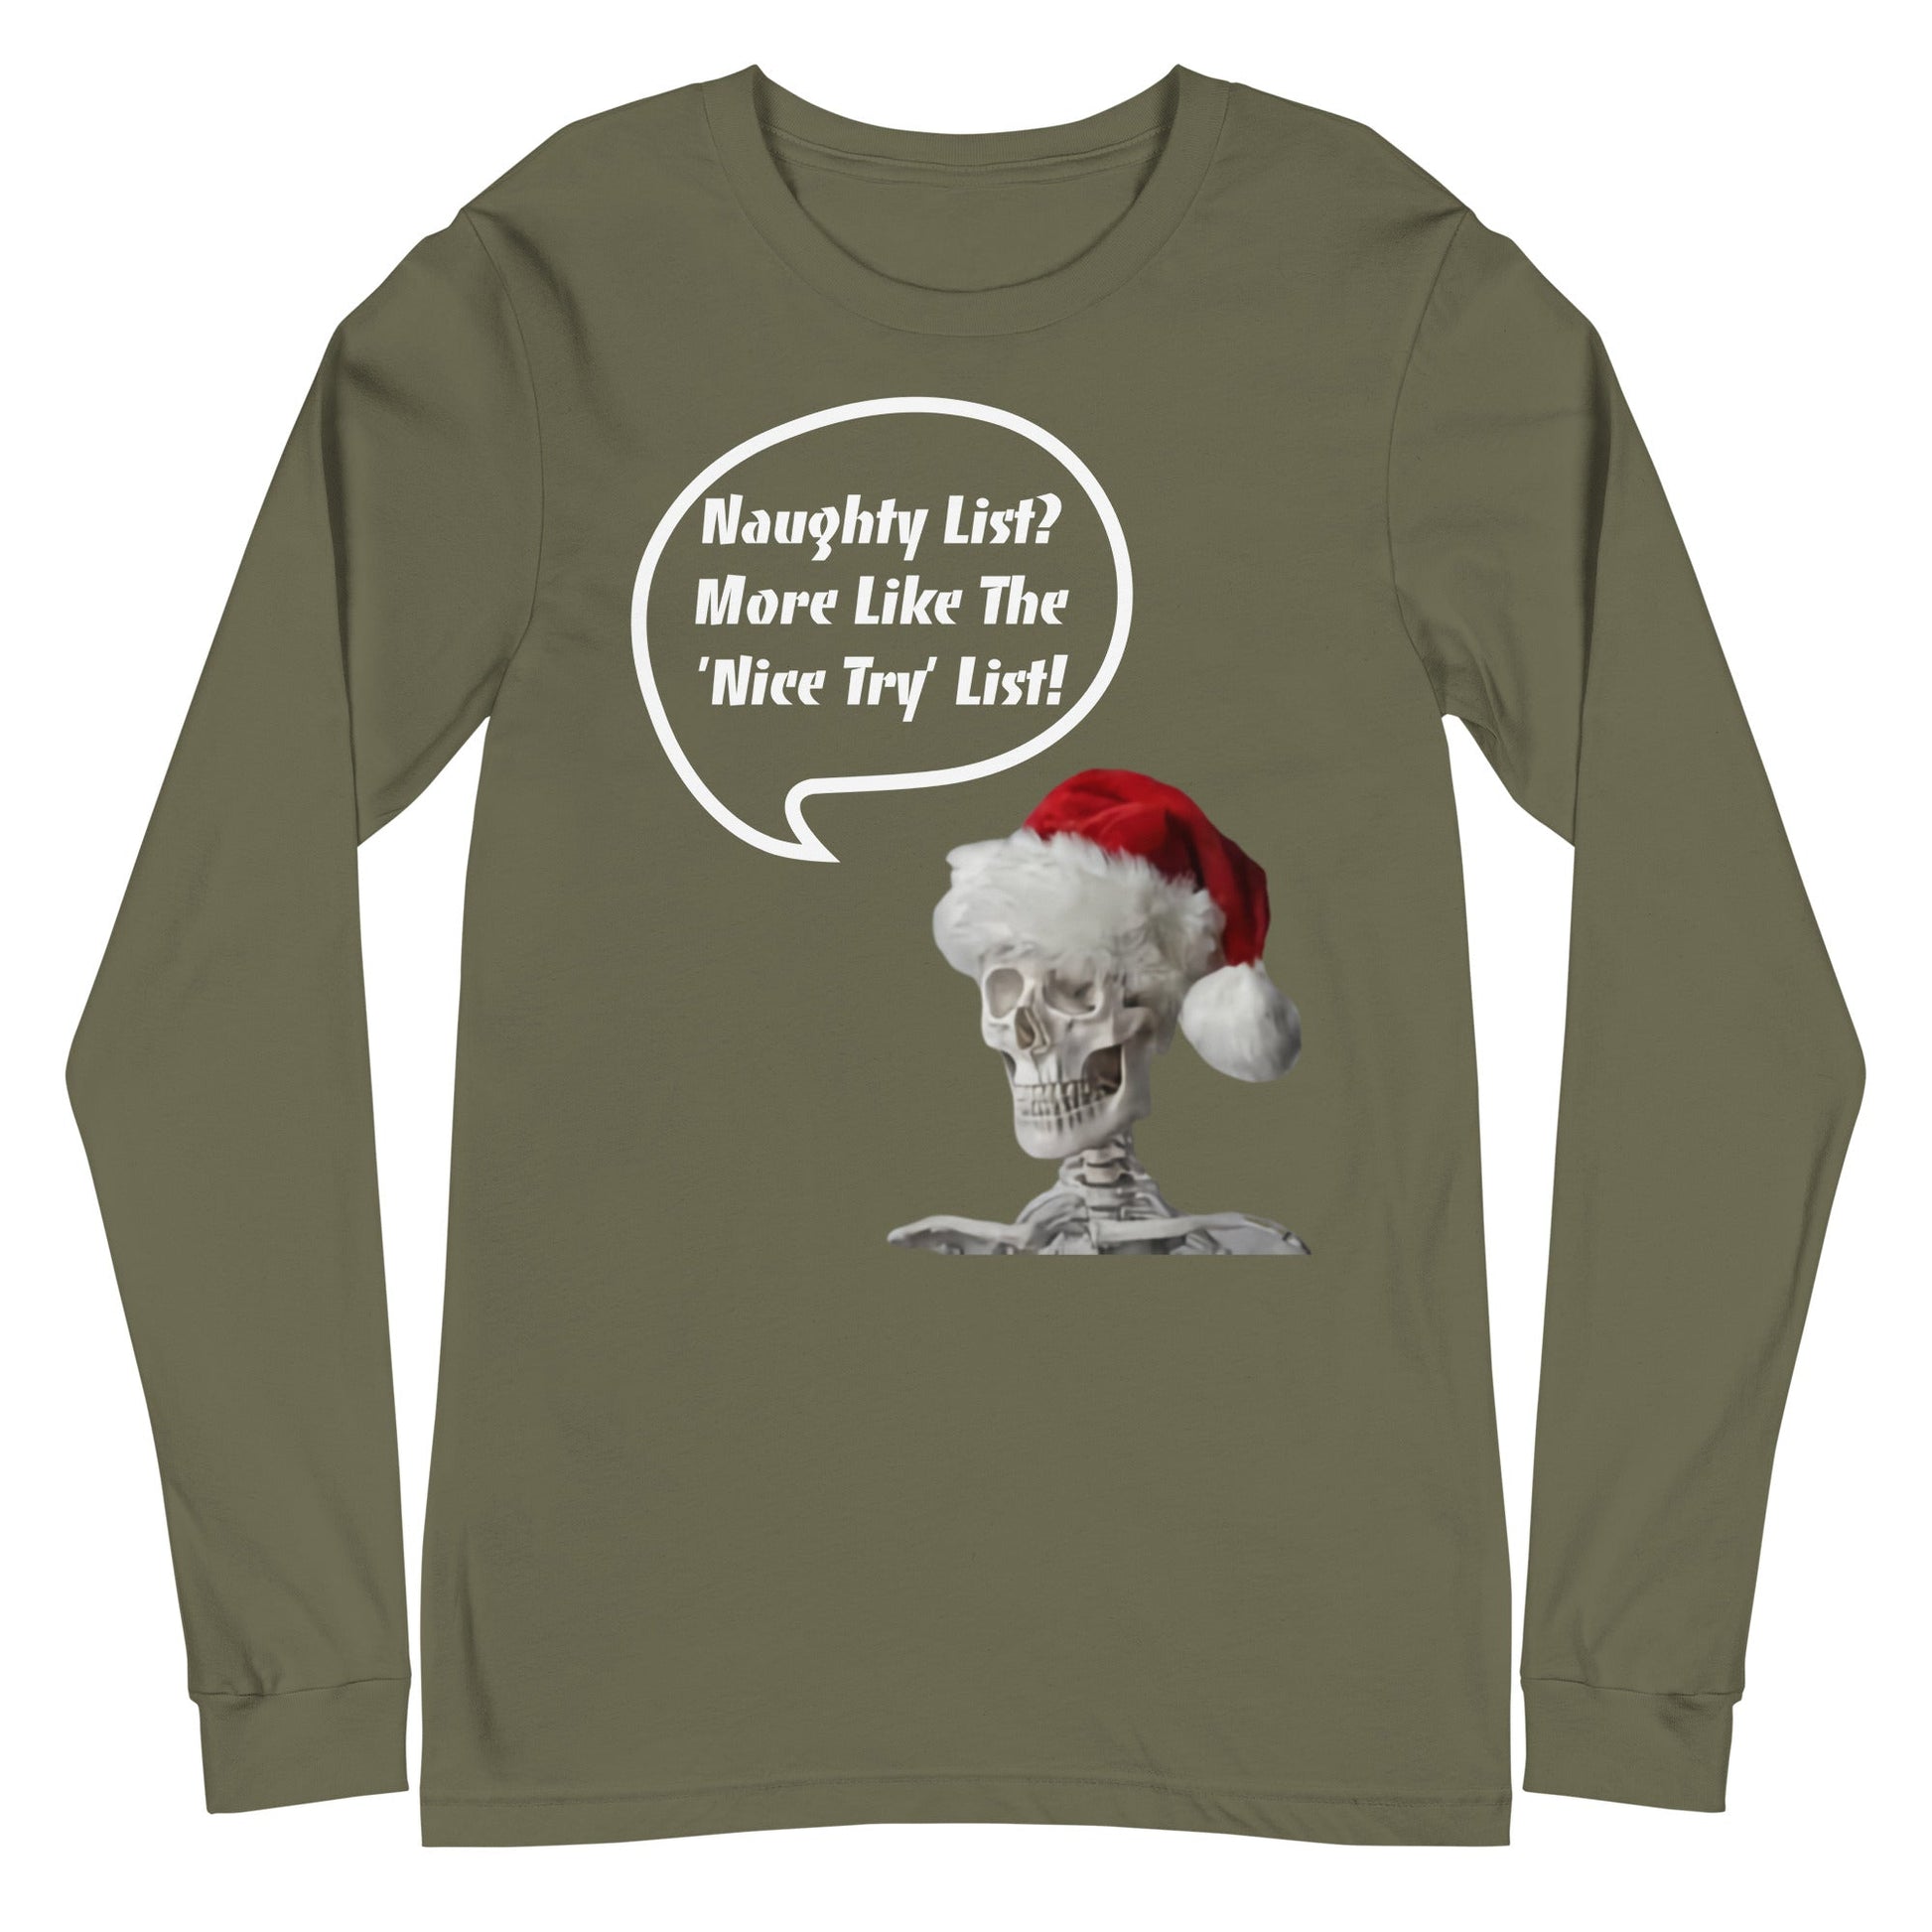 Naughty List? Unisex Long Sleeve Tee / Christmas Holiday Funny T-shirt - Lizard Vigilante